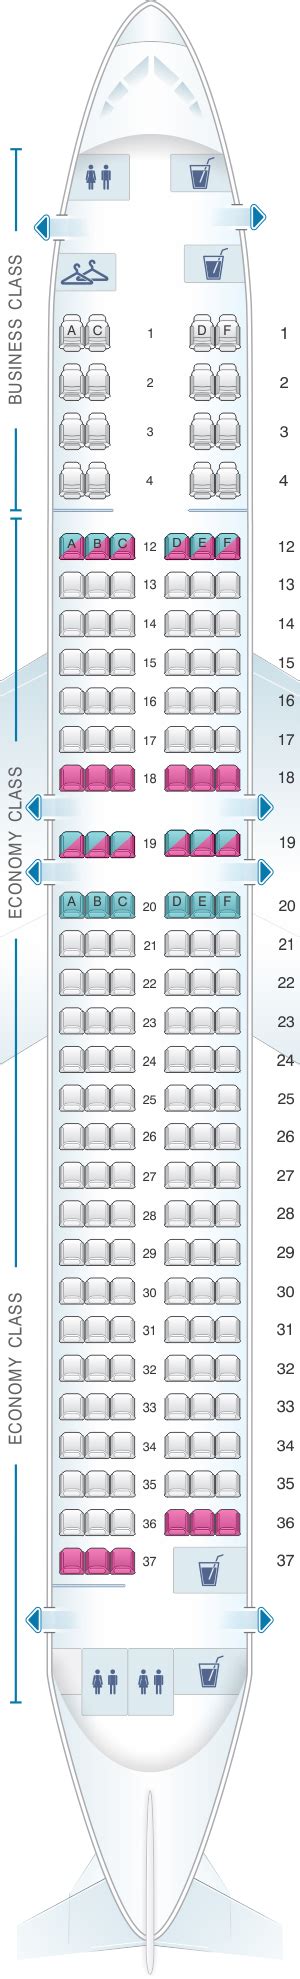 Air Canada Boeing Max Seating Chart Tutorial Pics